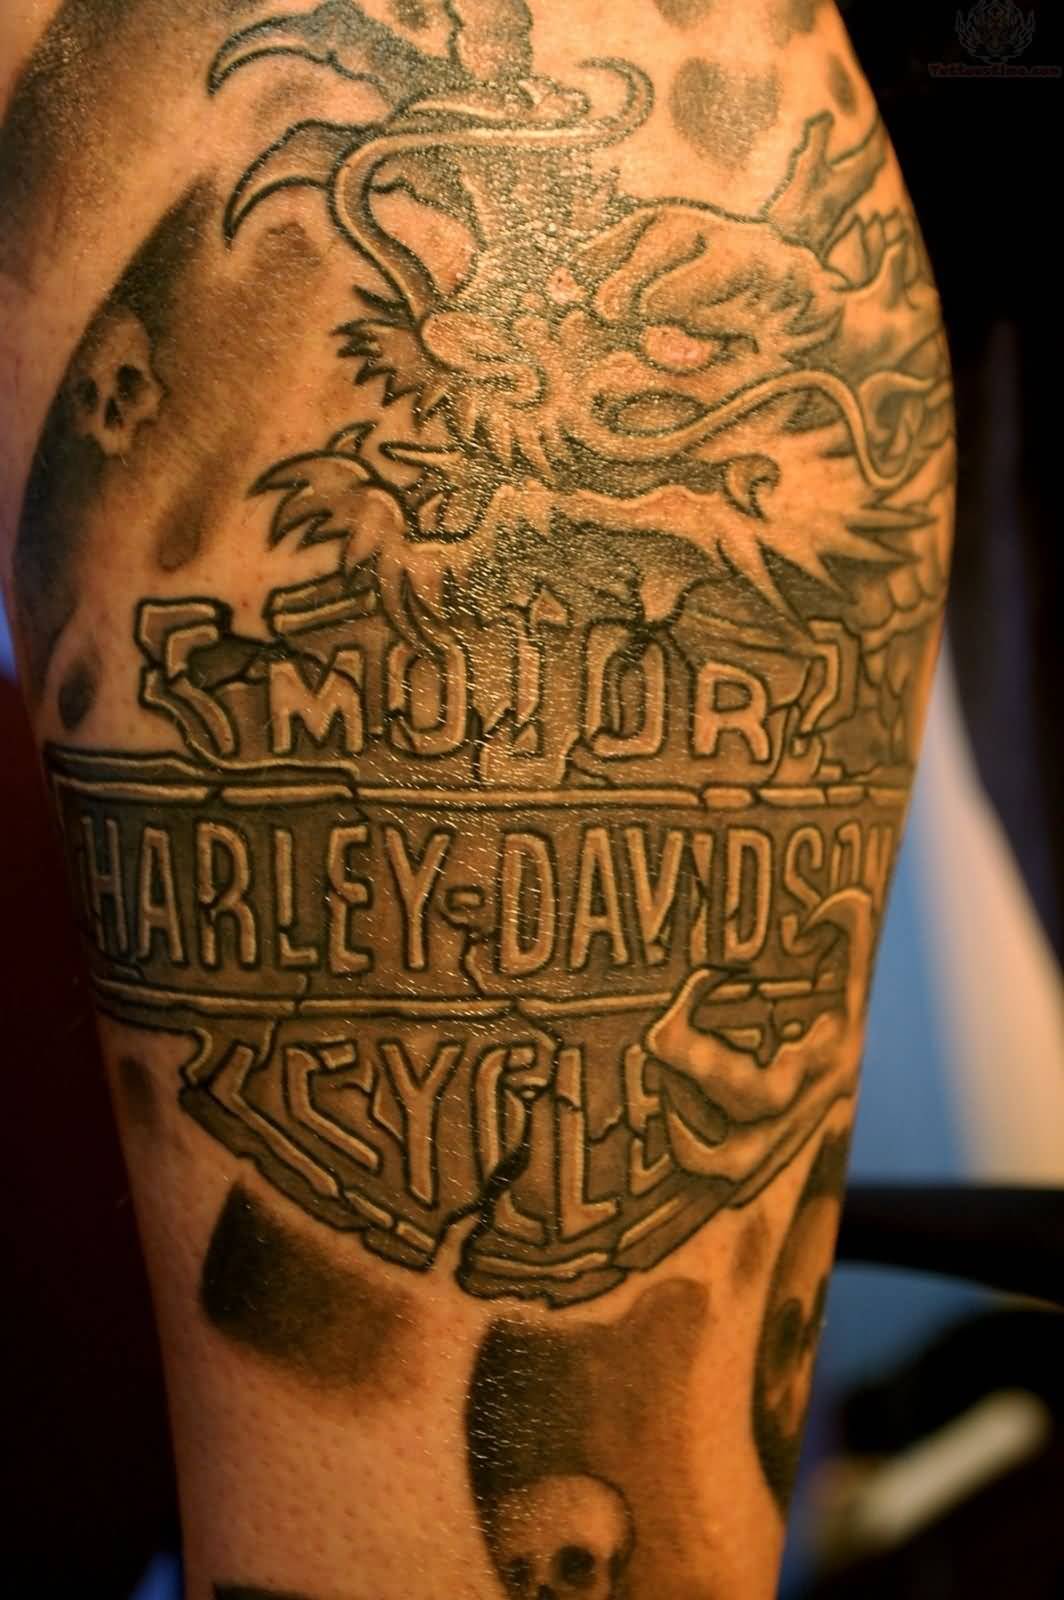 Harley Davidson Logo With Dragon Tattoo